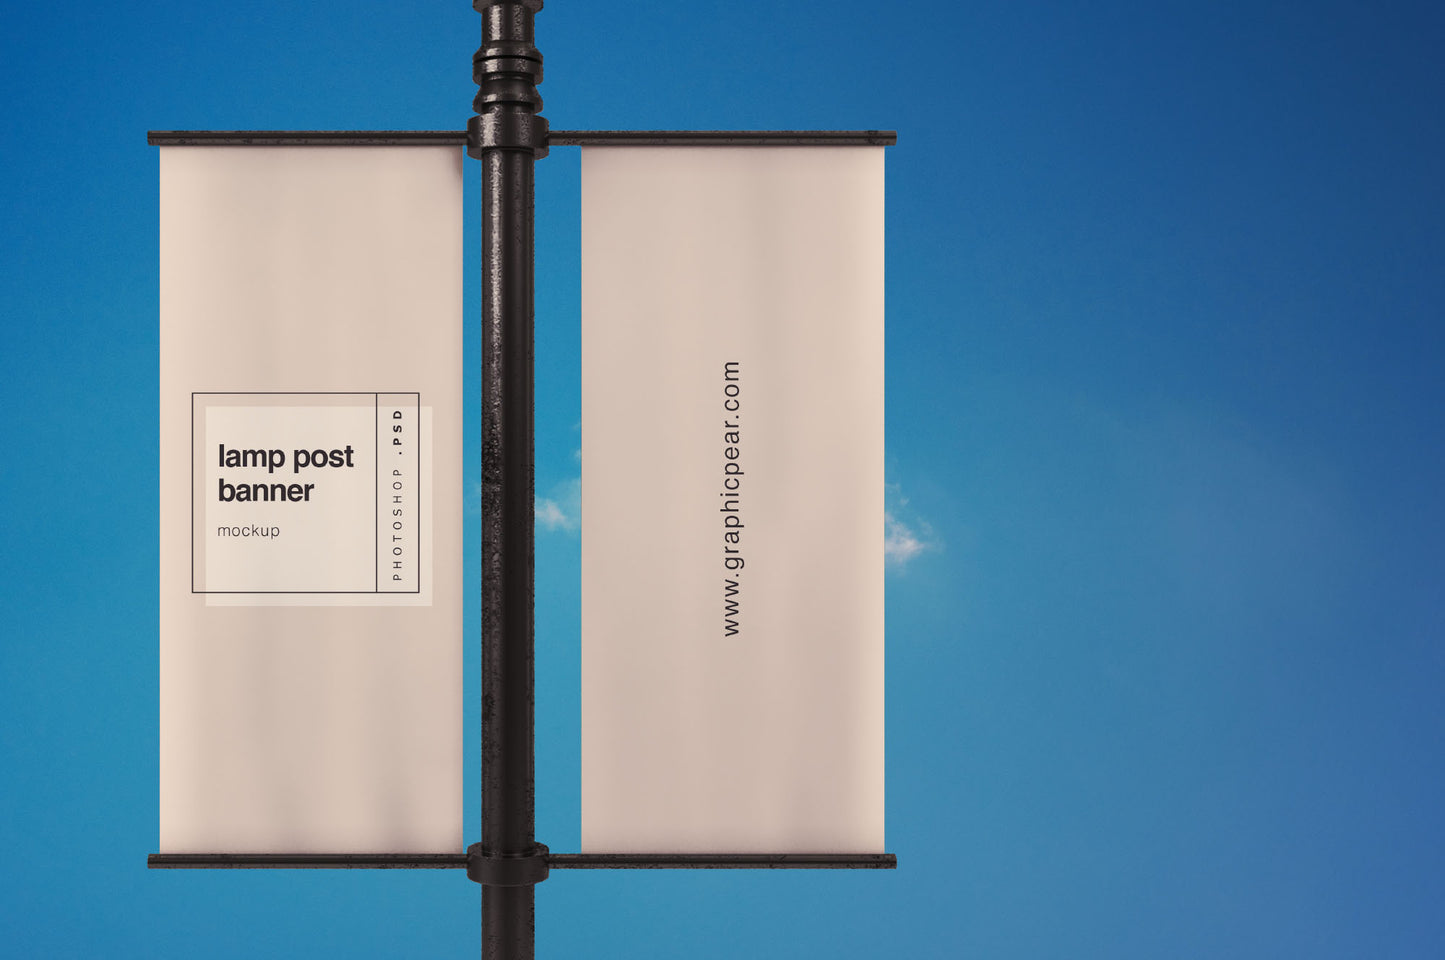 Free Lamp Post Banner Mockup